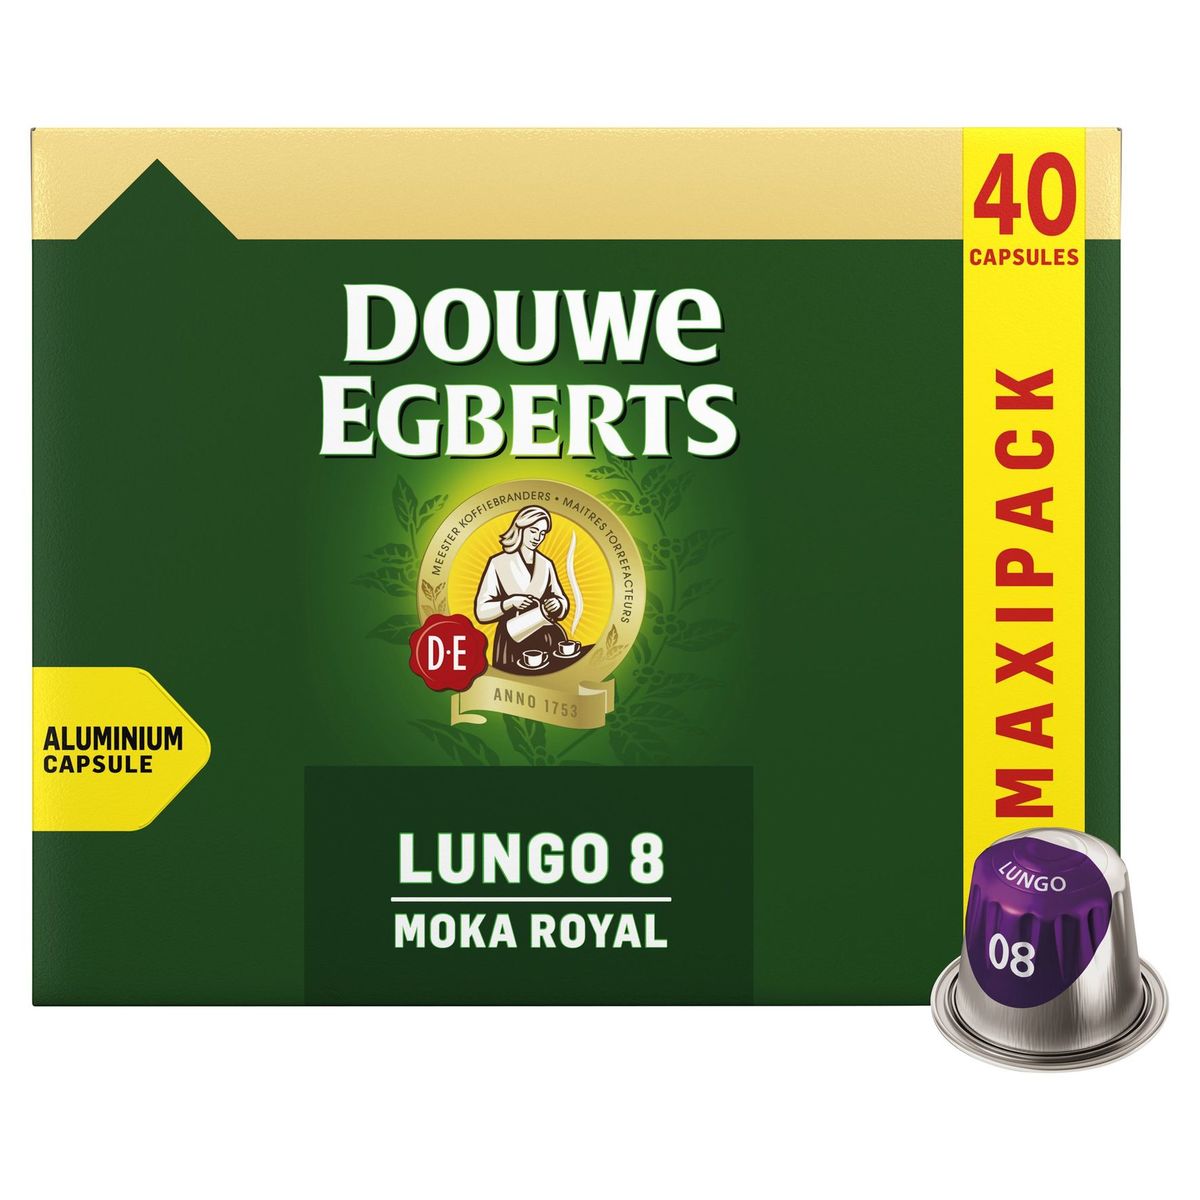 DOUWE EGBERTS Koffie Capsules Moka Royal Lungo Intensiteit 08 Nespresso®* Compatibel 40 stuks